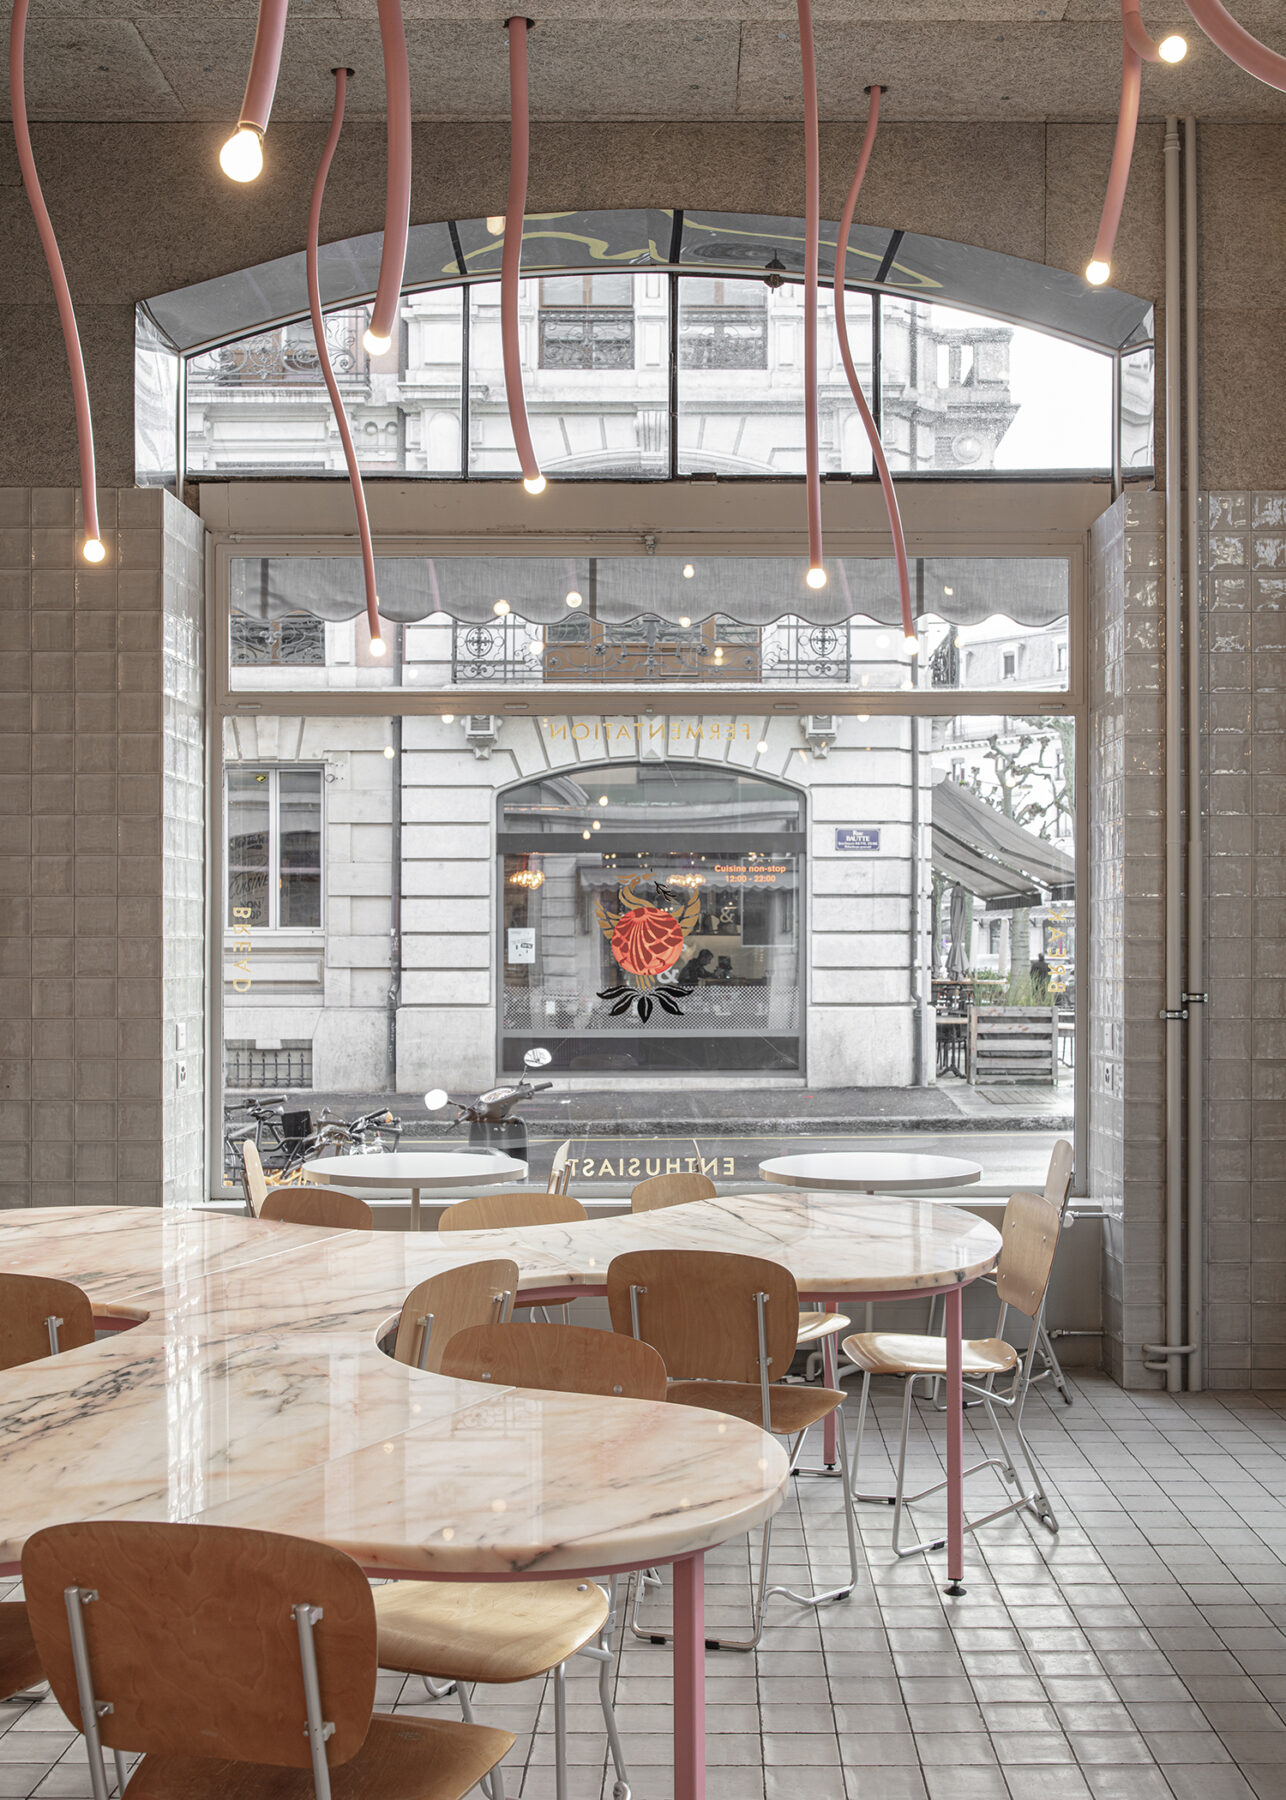 Archisearch SAWERDŌ Bakery & Coffee designed by BUREAU in Geneva, Switzerland